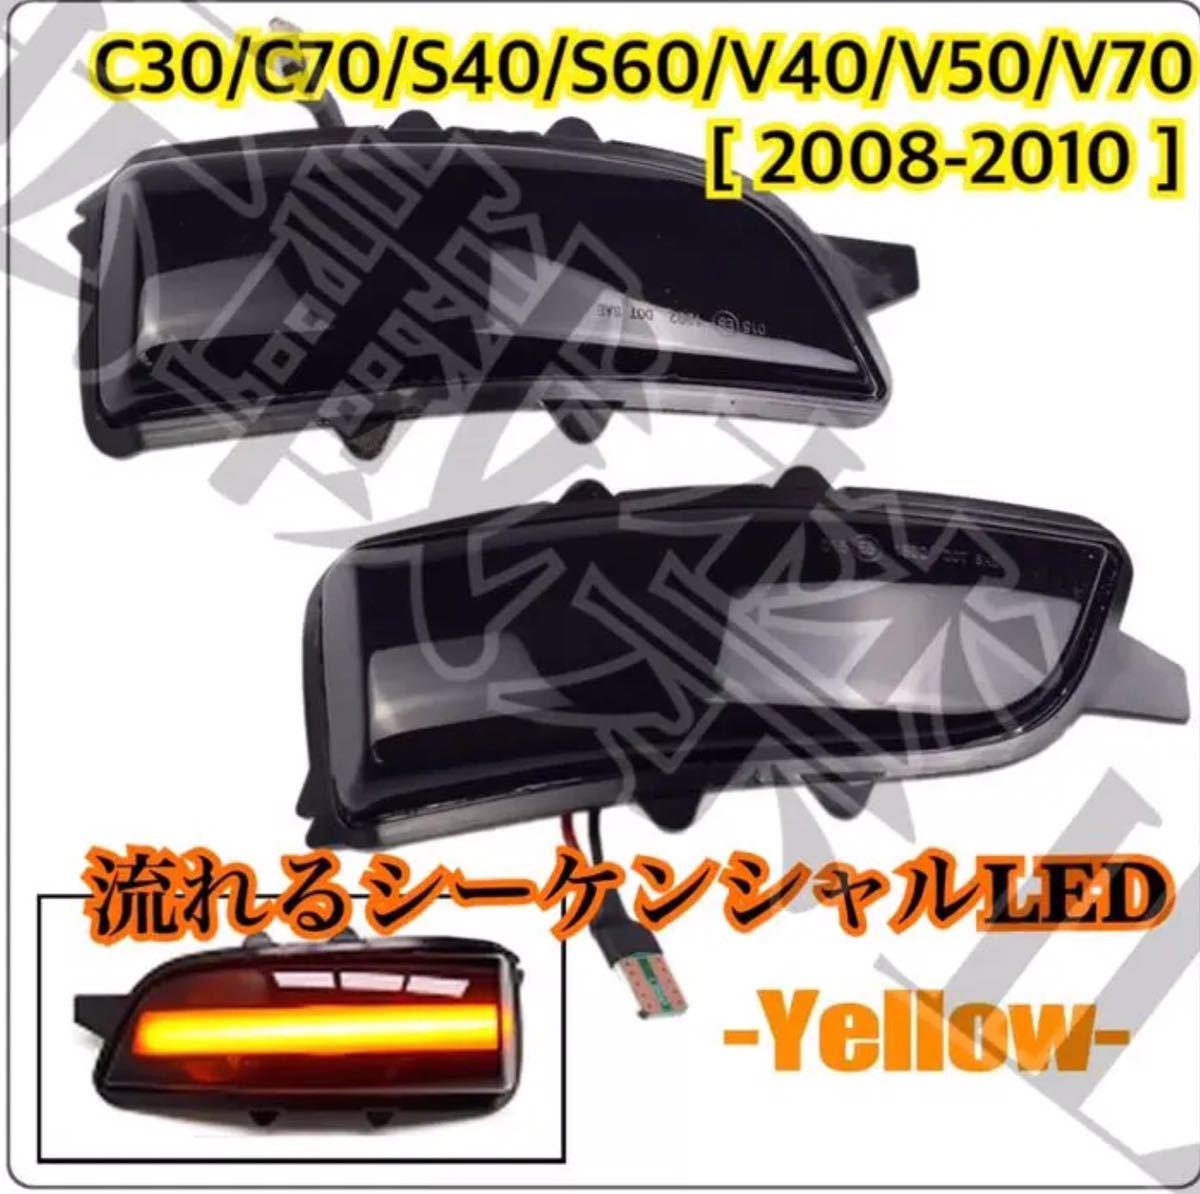 VOLVO C30/C70/S40/S60/V40/V50/V70 ドアミラー シーケンシャル LED [2008-2010] ダイナミック 流れるウインカー 工具付◎社外品/ユニット_画像2